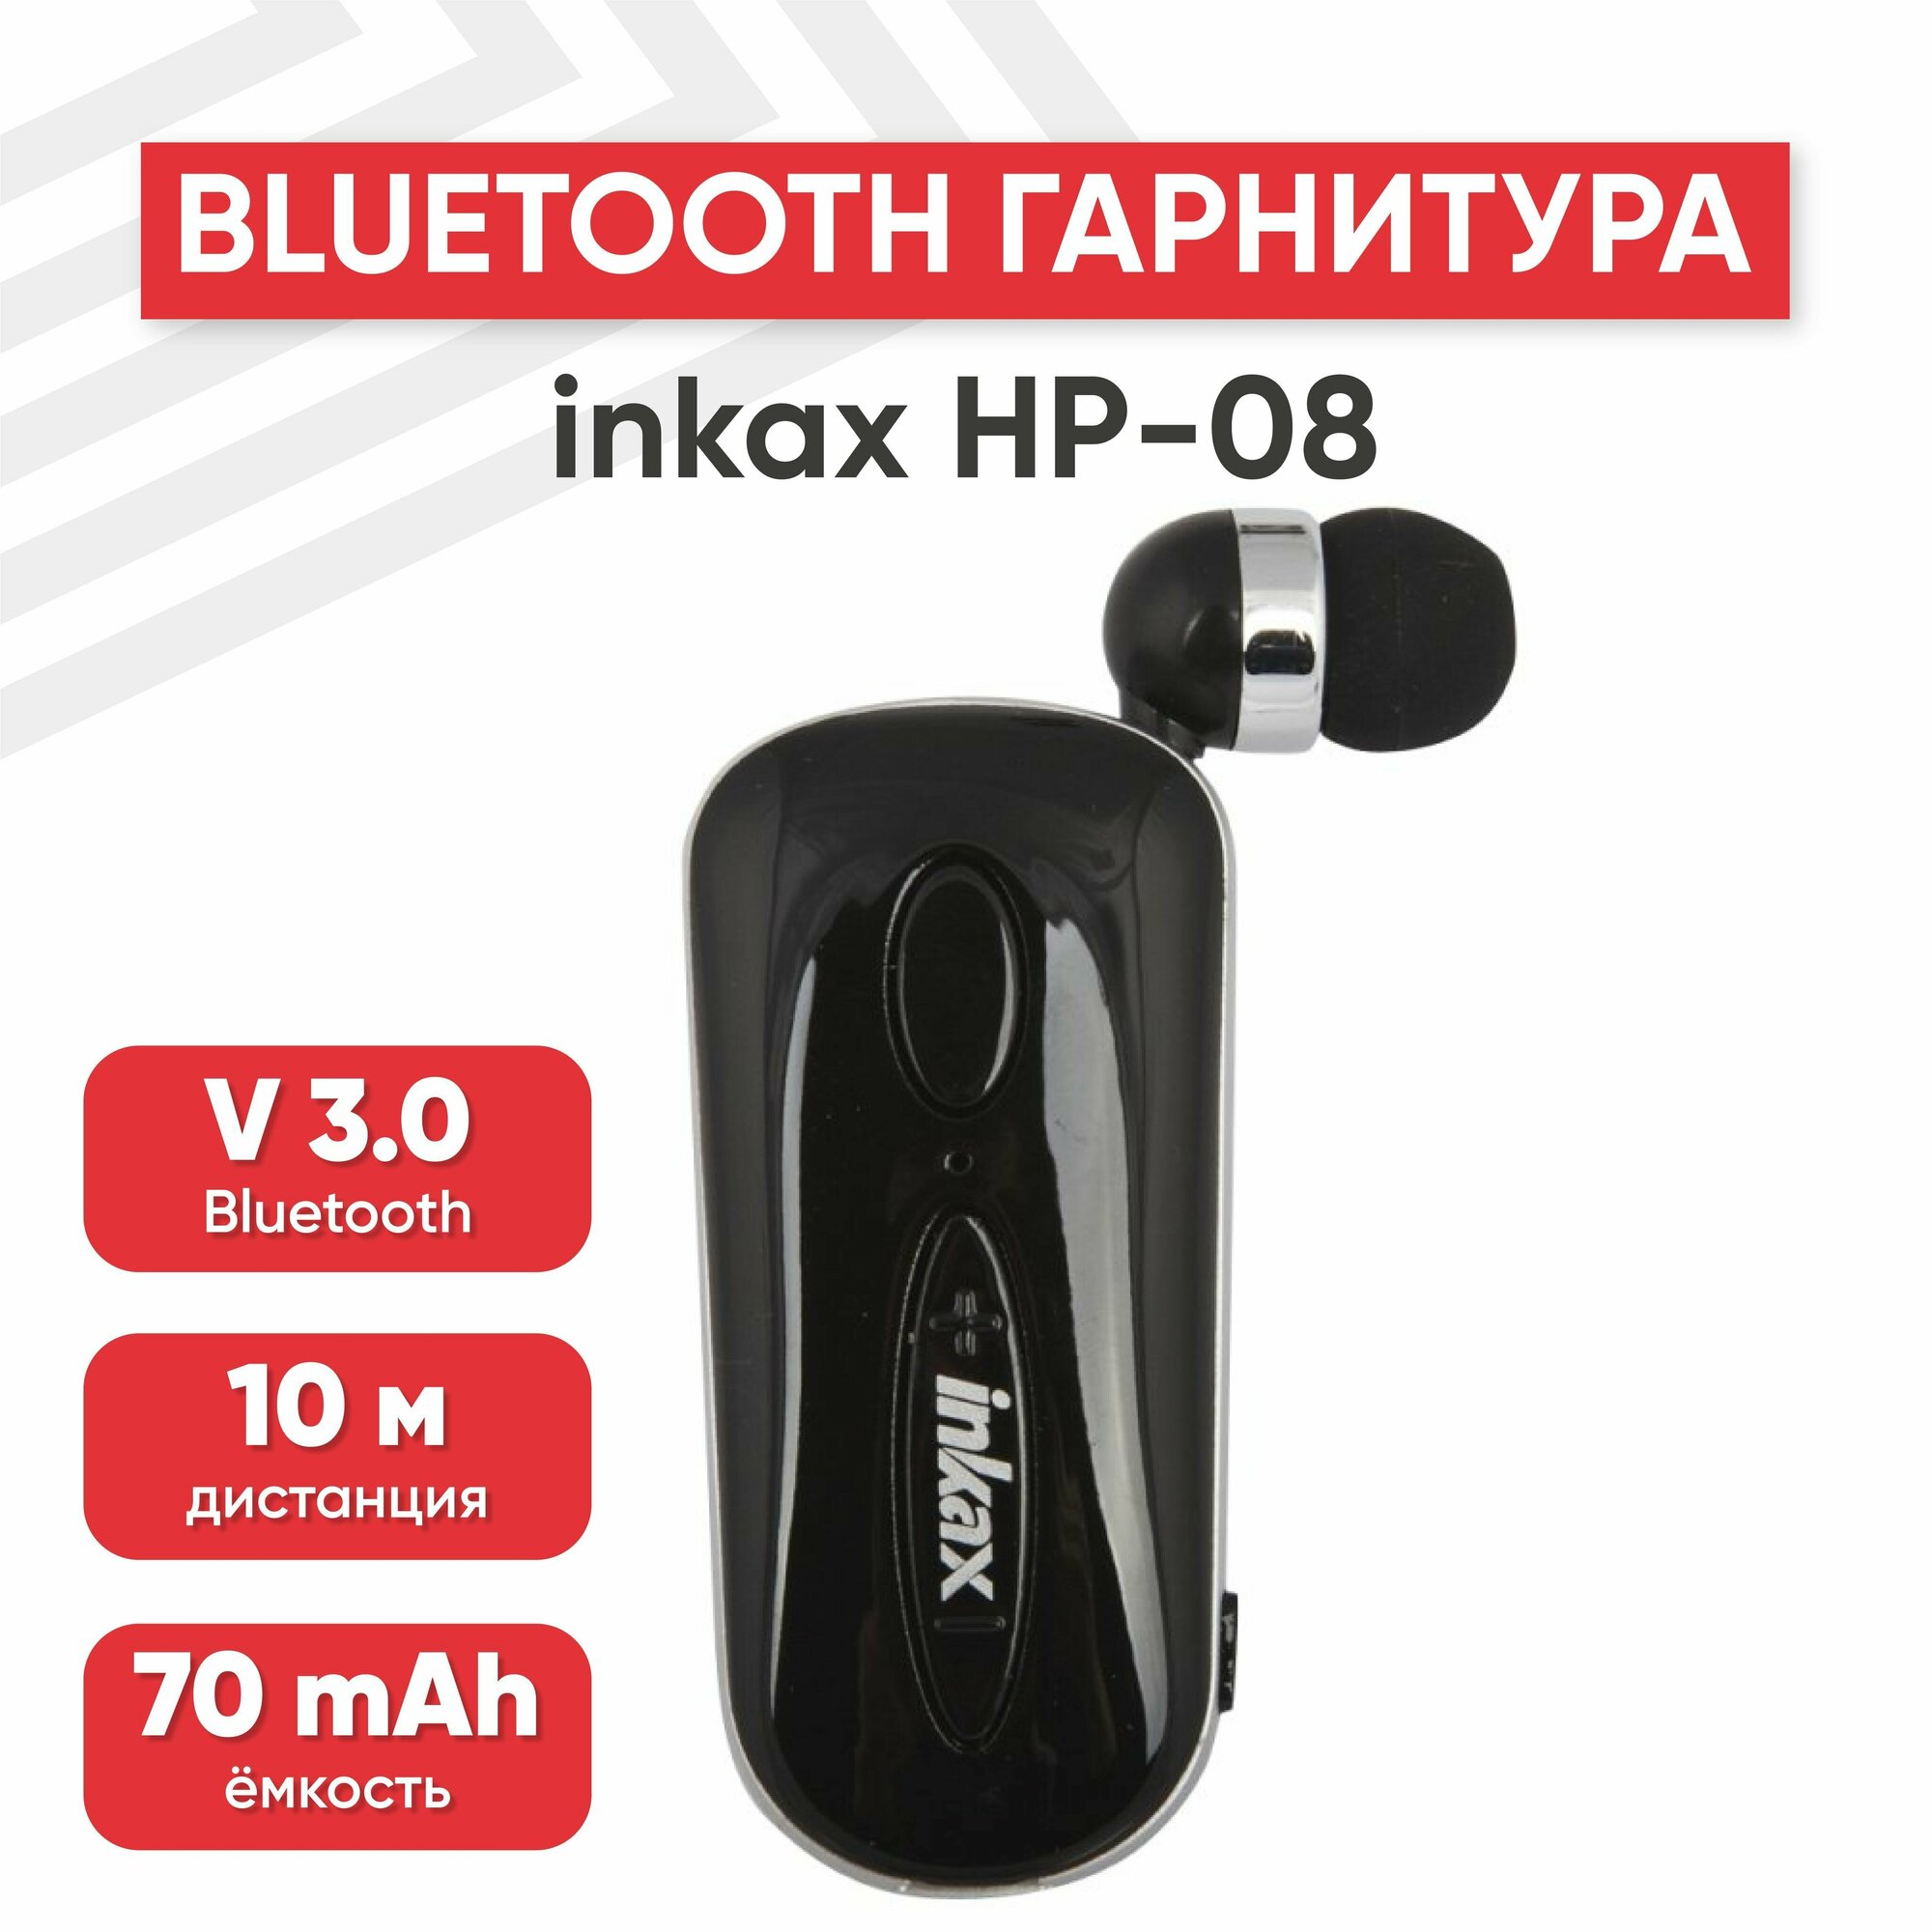 Bluetooth гарнитура inkax HP-08, моно, внутриканальная, черная